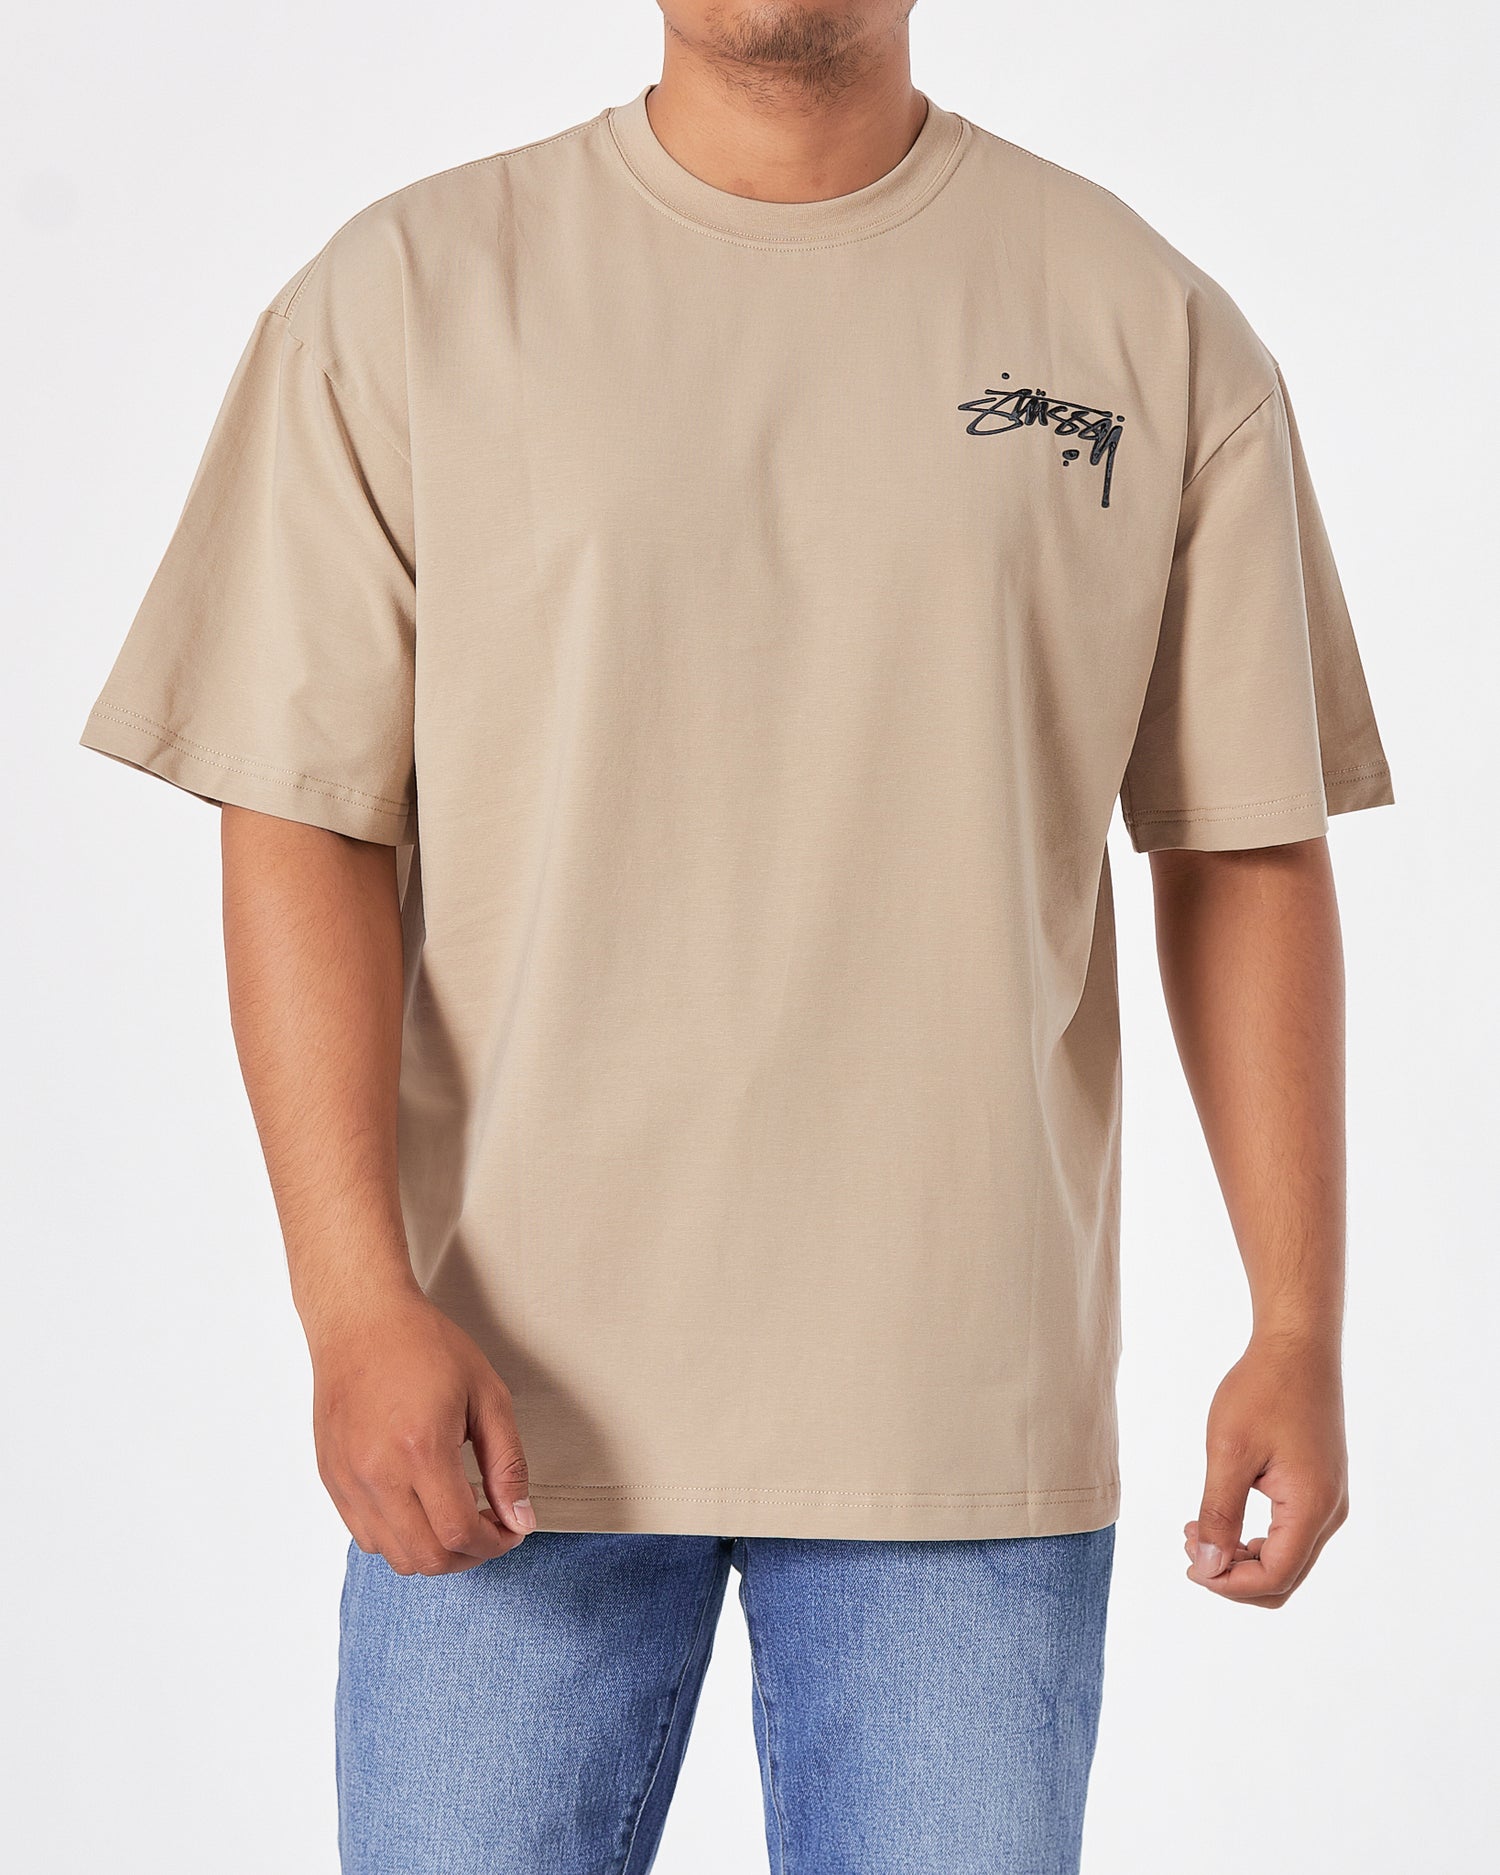 STU Front Back Logo Graffiti Printed Men Cream T-Shirt 20.90